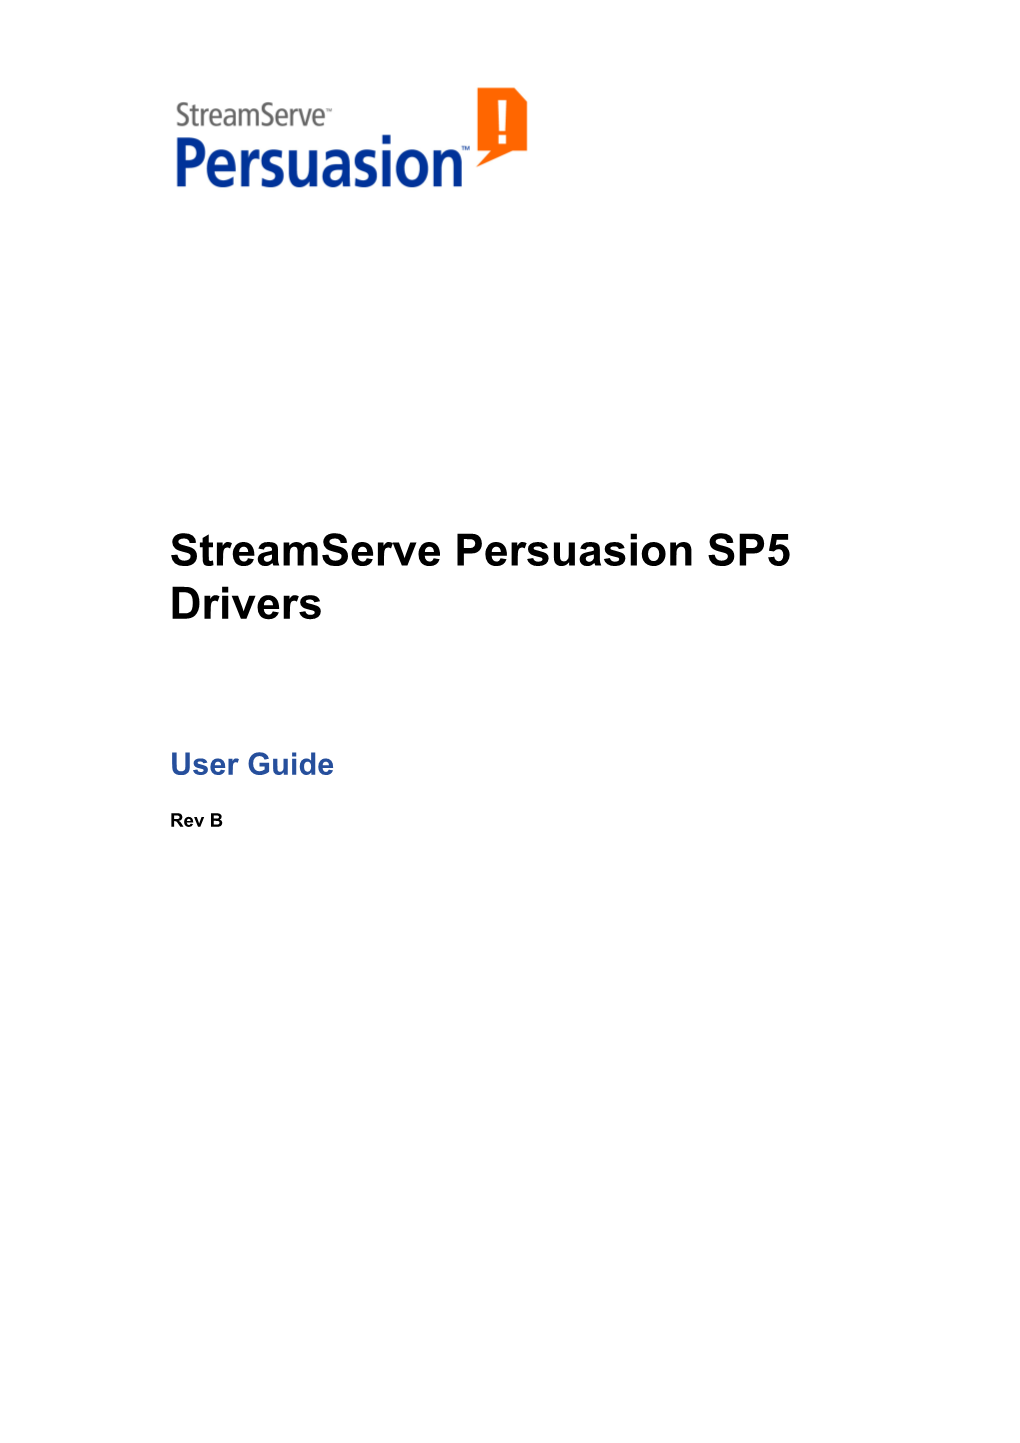 Streamserve Persuasion SP5 Drivers